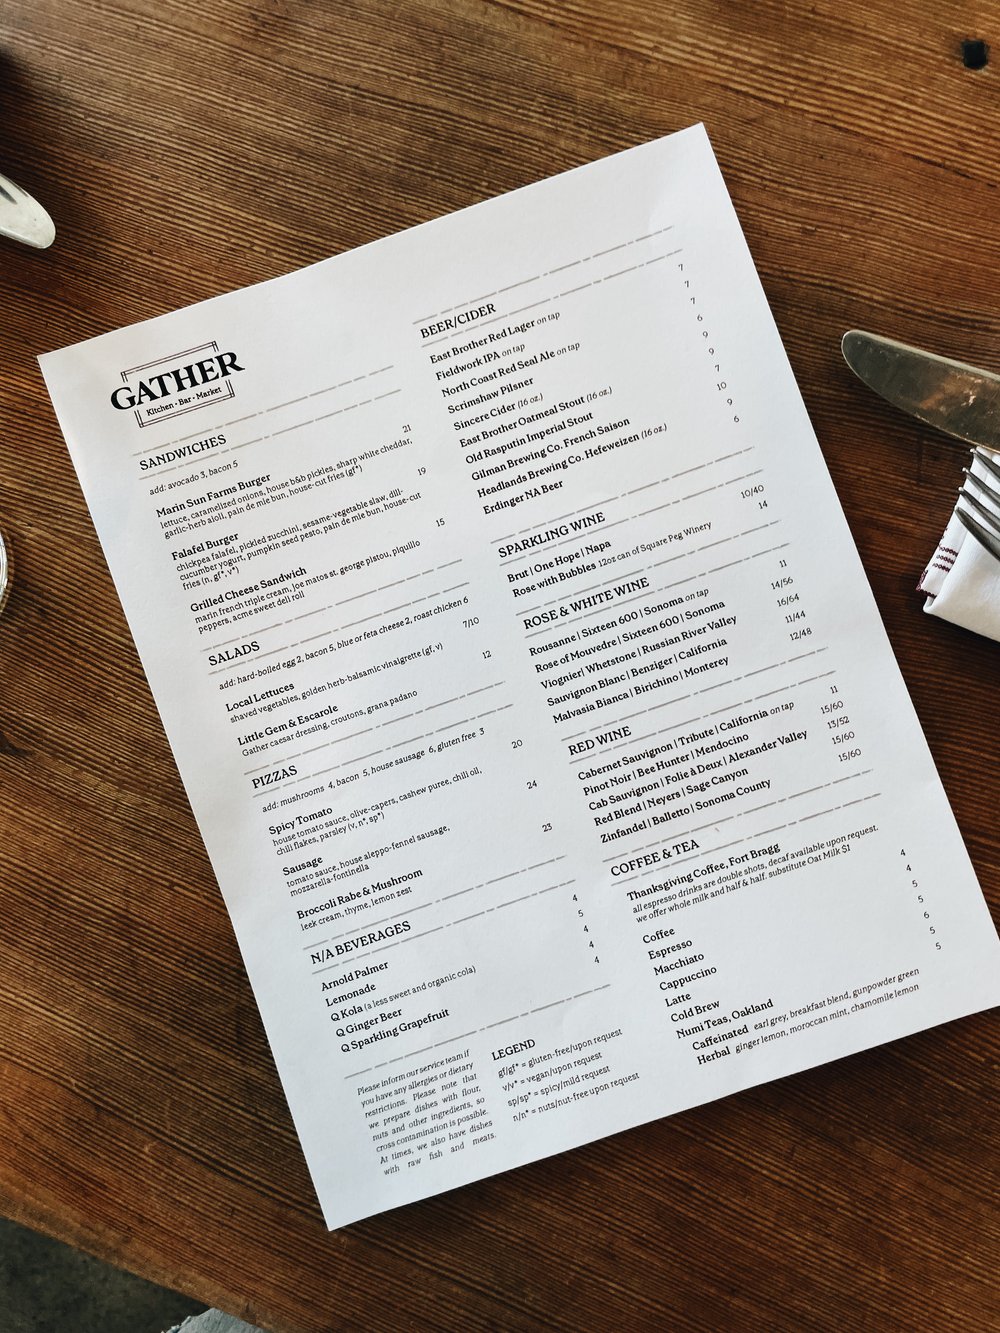 gather-berkeley-local-restaurant.JPG